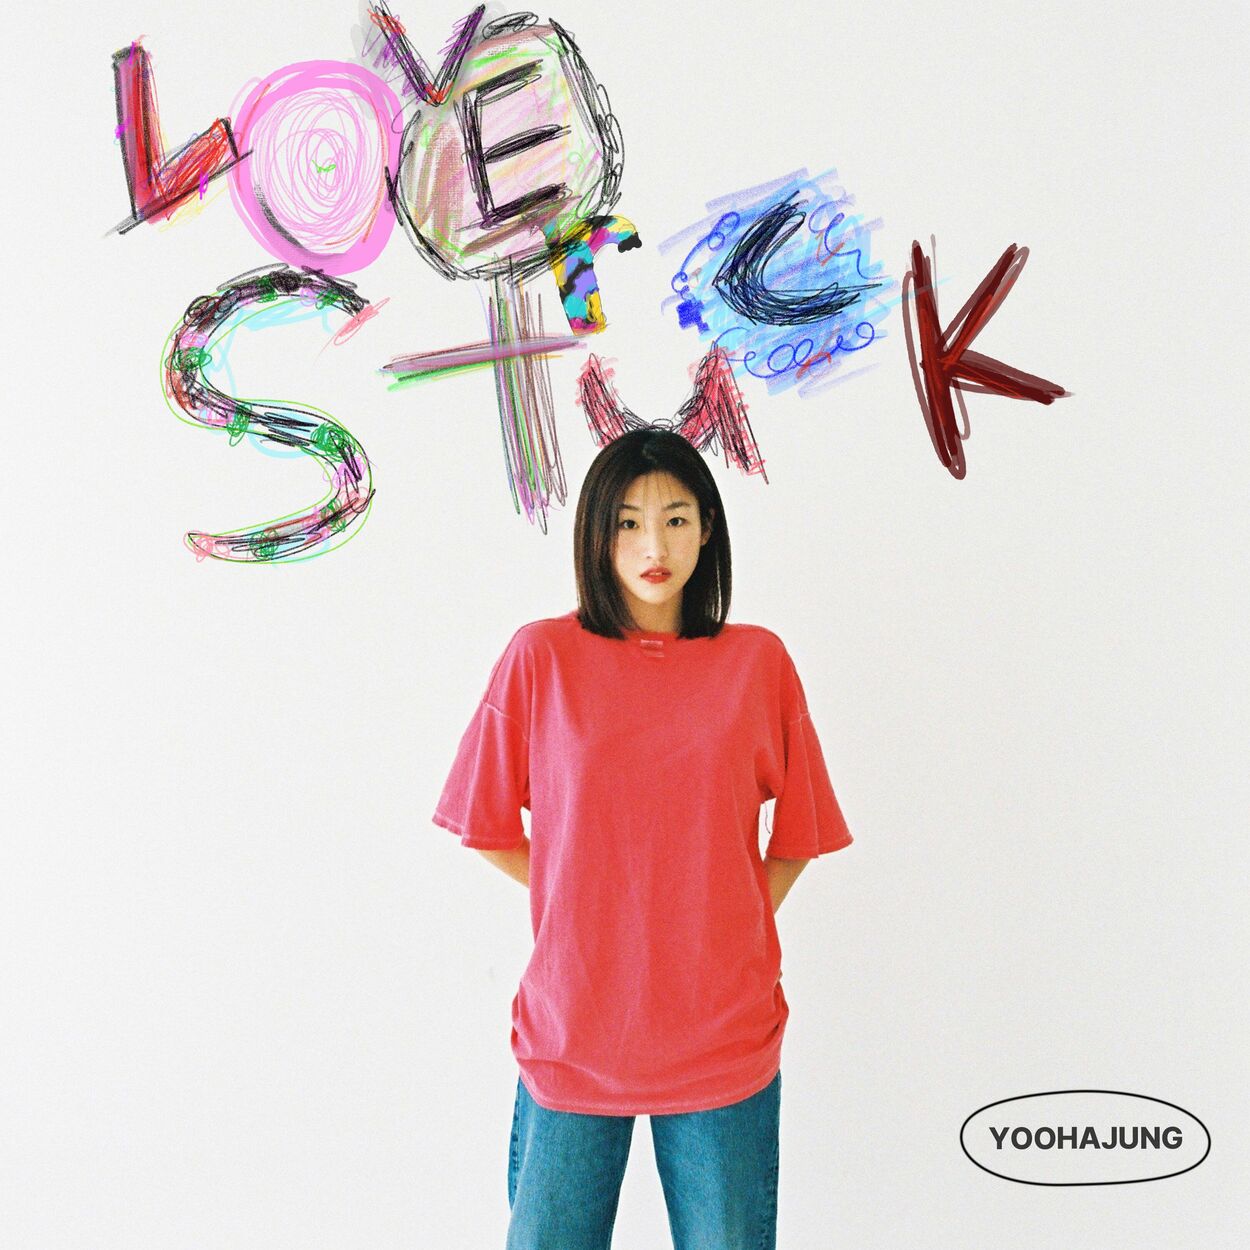 Yoohajung – Lovestruck – Single